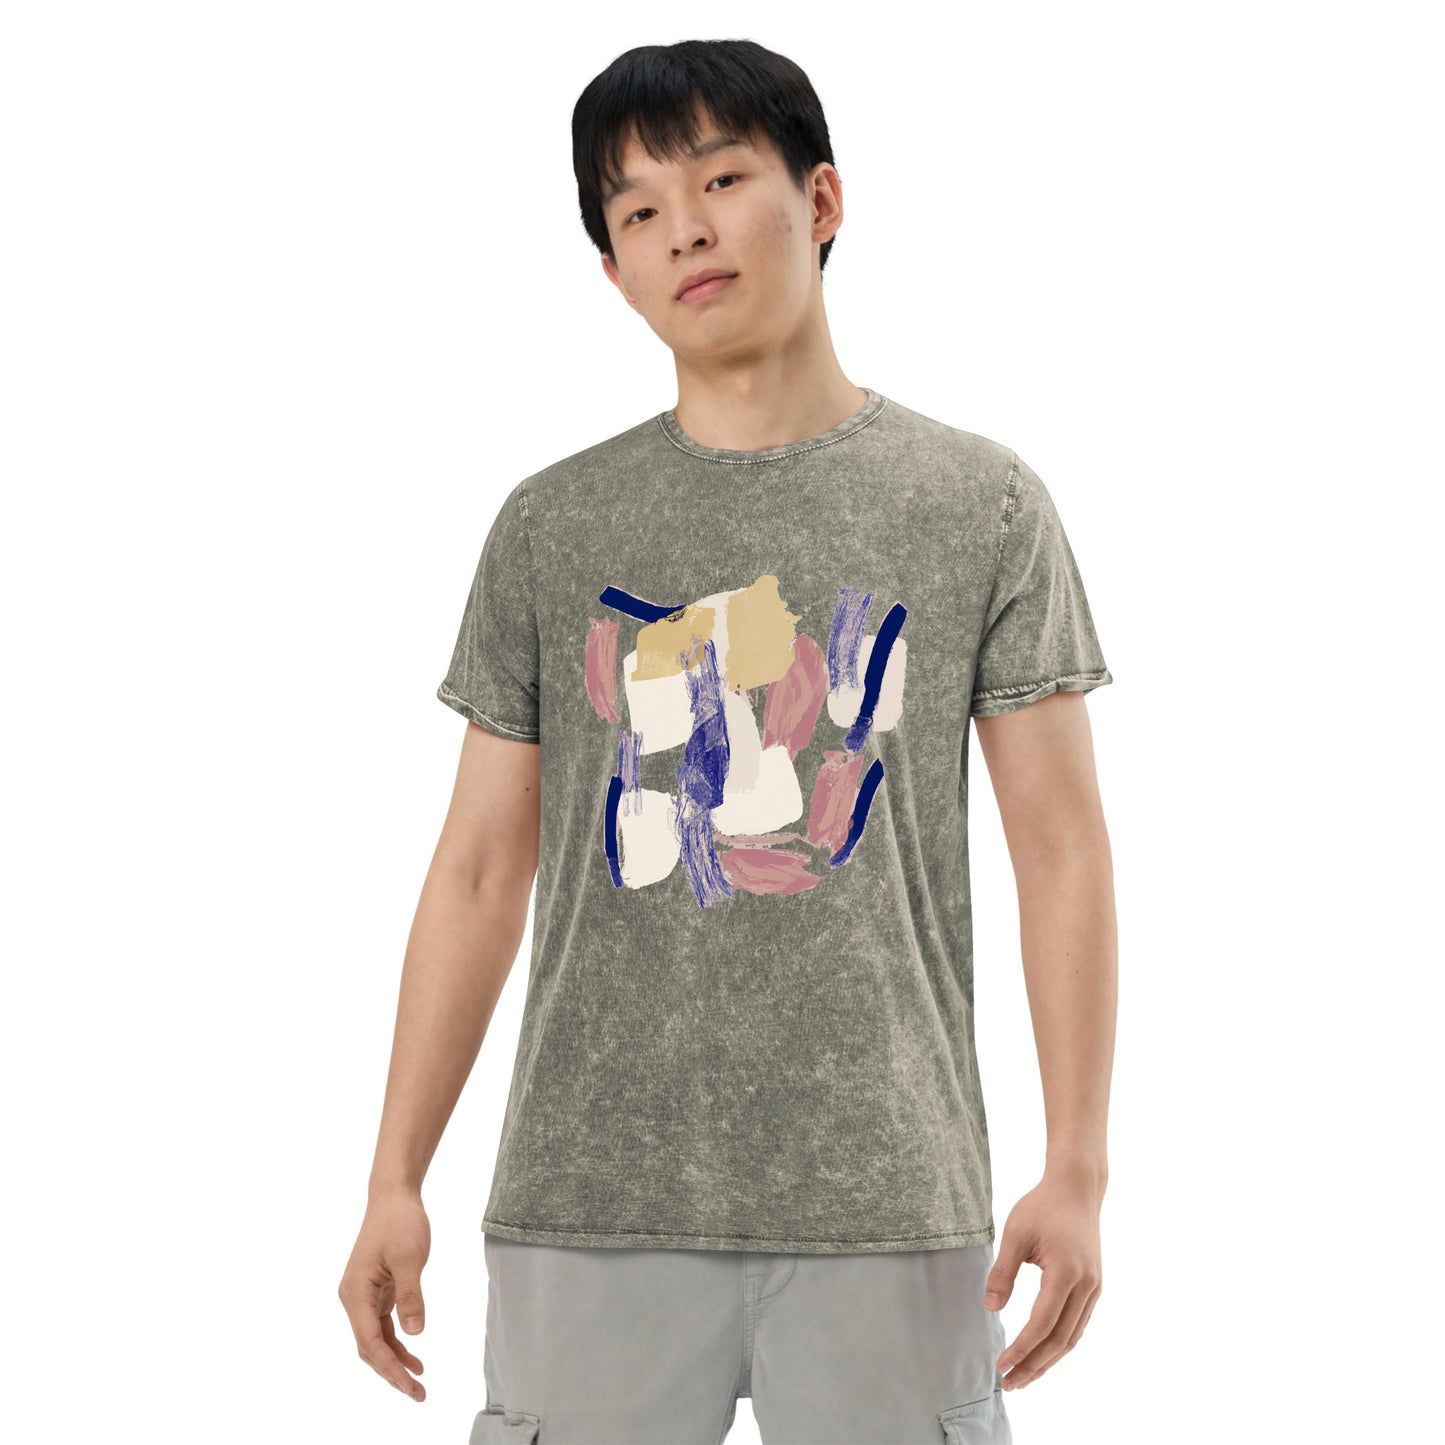 Unisex graphic t shirt